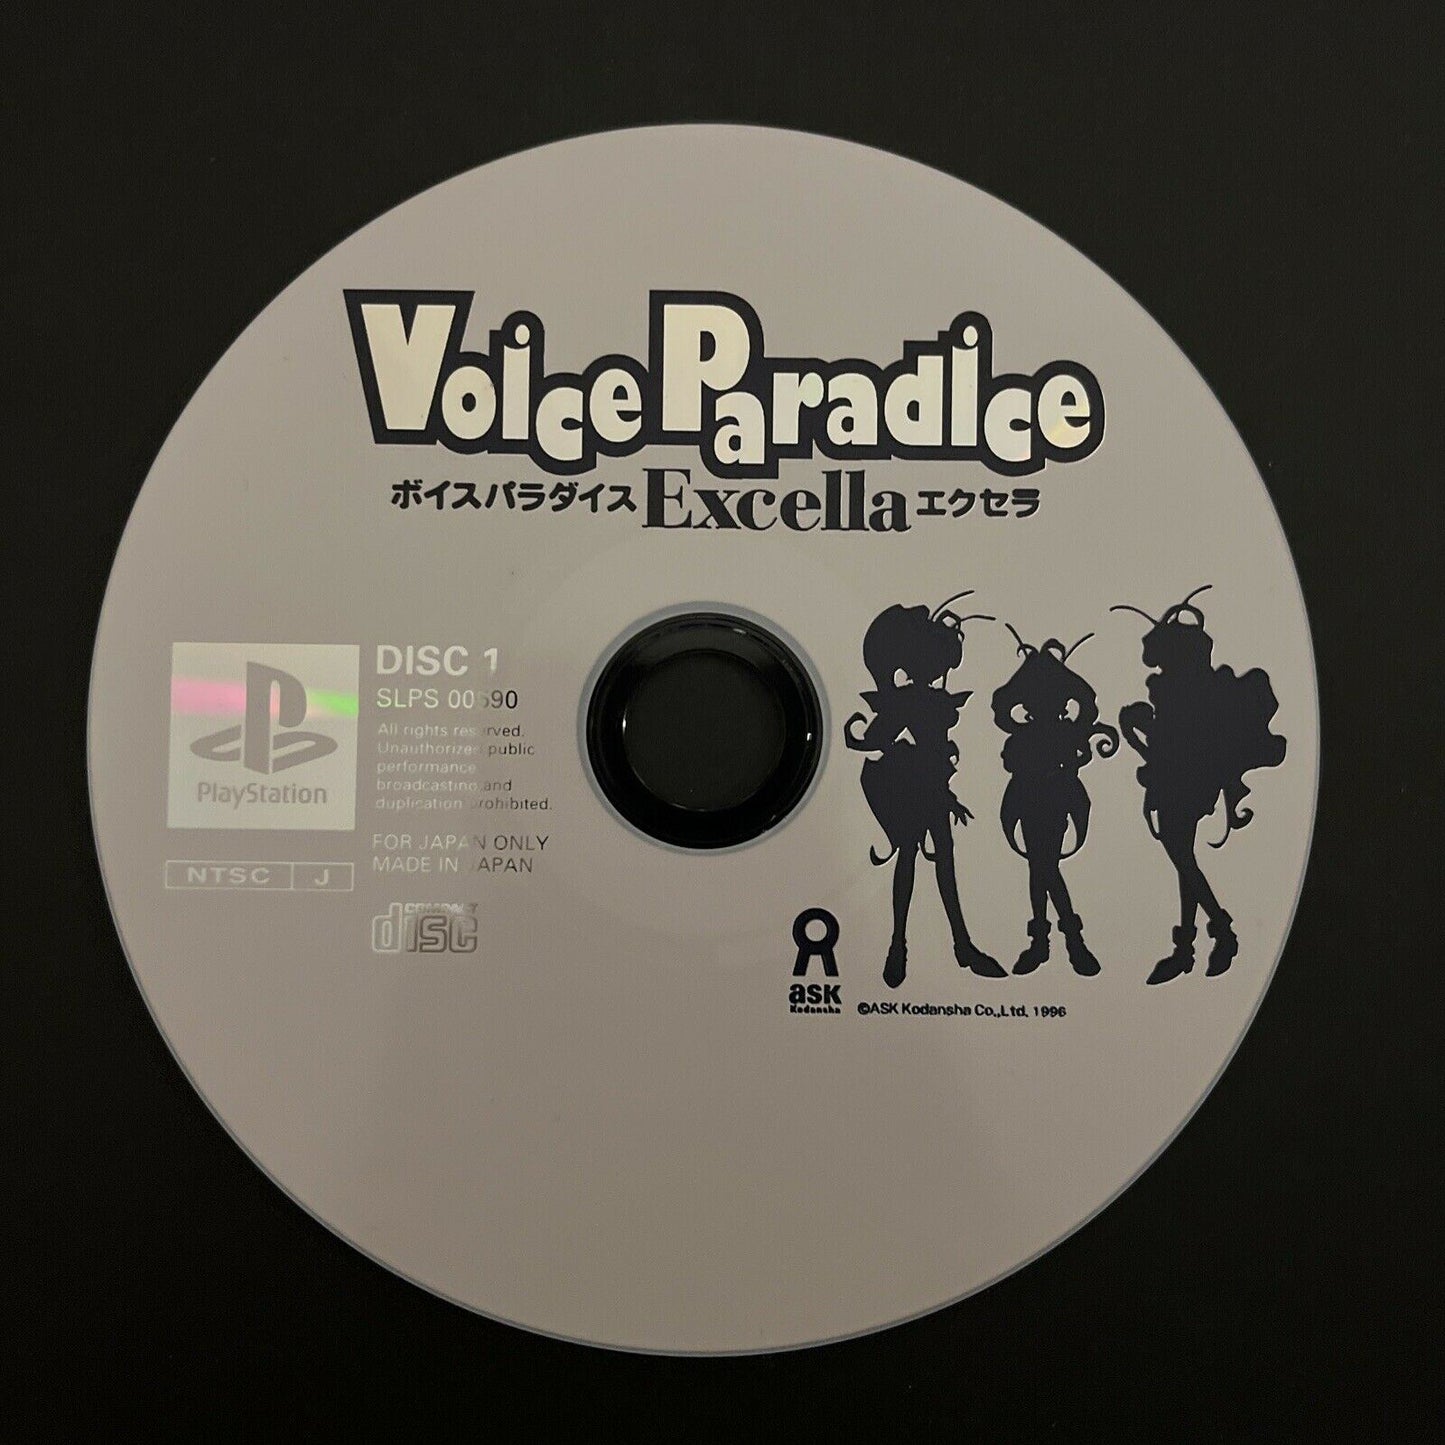 Voice Paradice Excella - PlayStation PS1 NTSC-J Japan Game